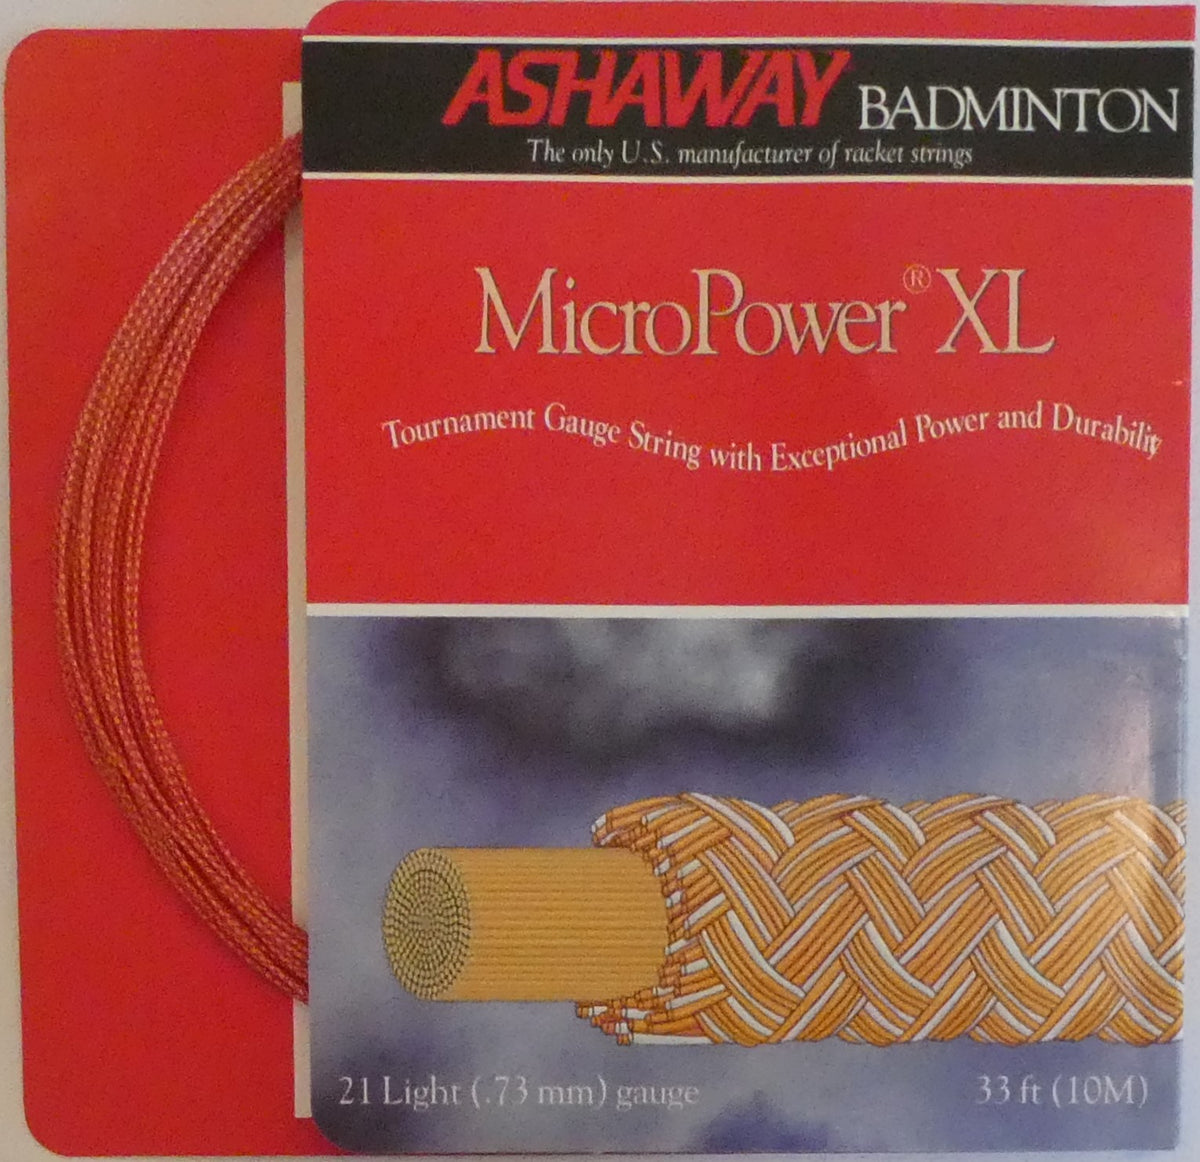 Ashaway MicroPower XL Badminton String, Orange with red spiral, 10 M SET